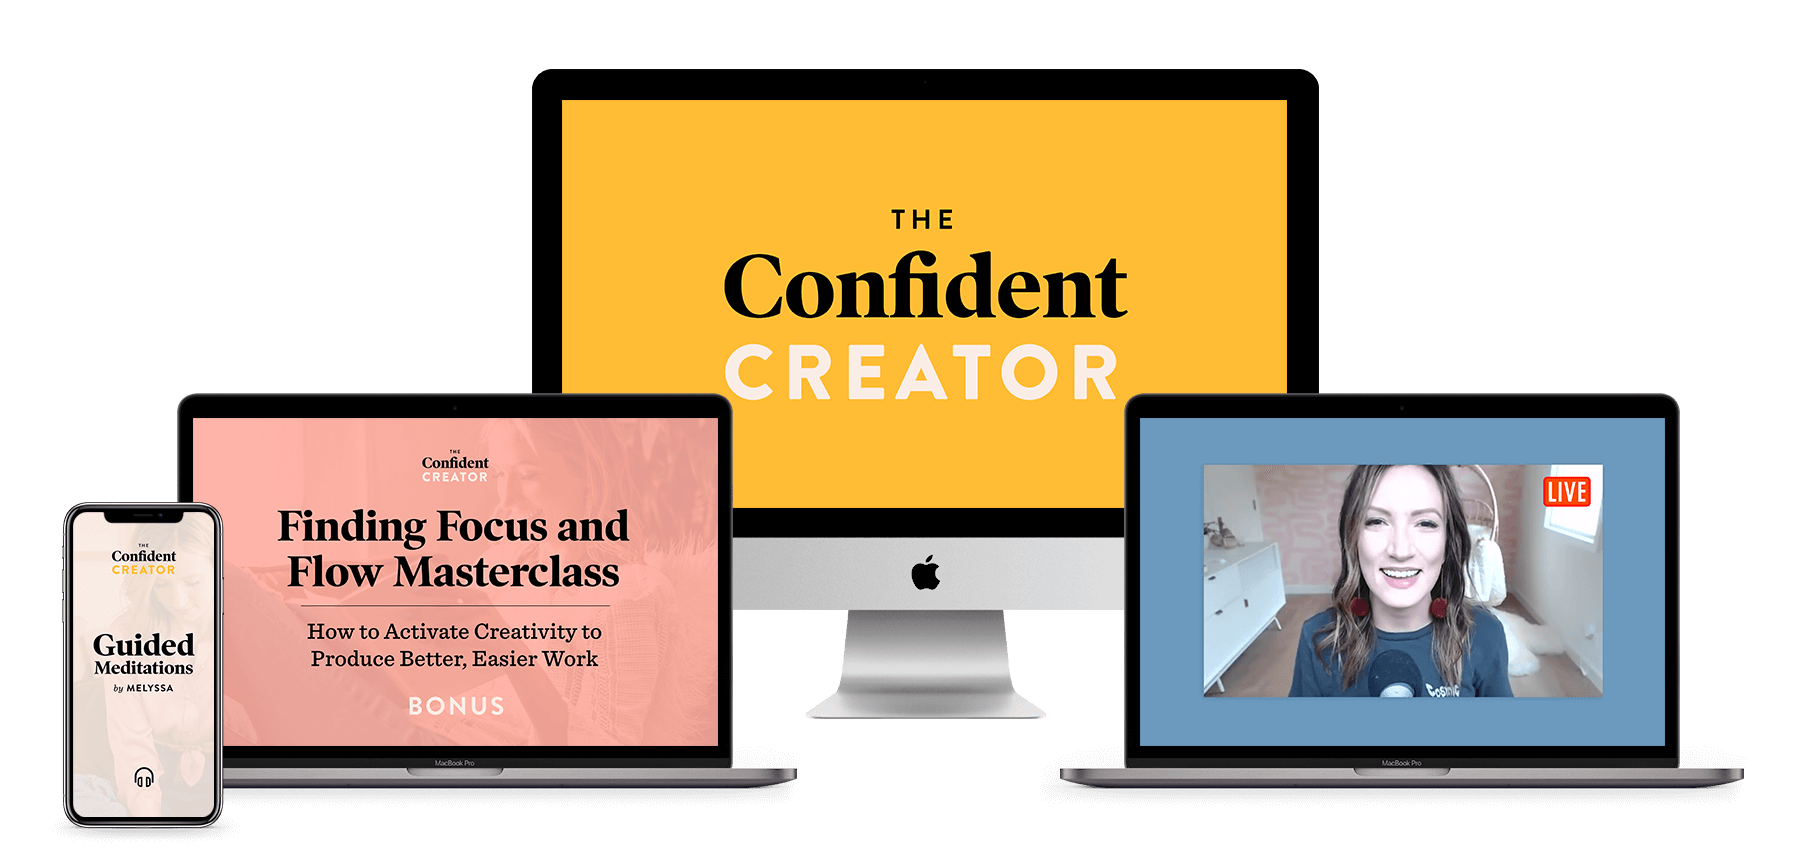 The Confident Creator